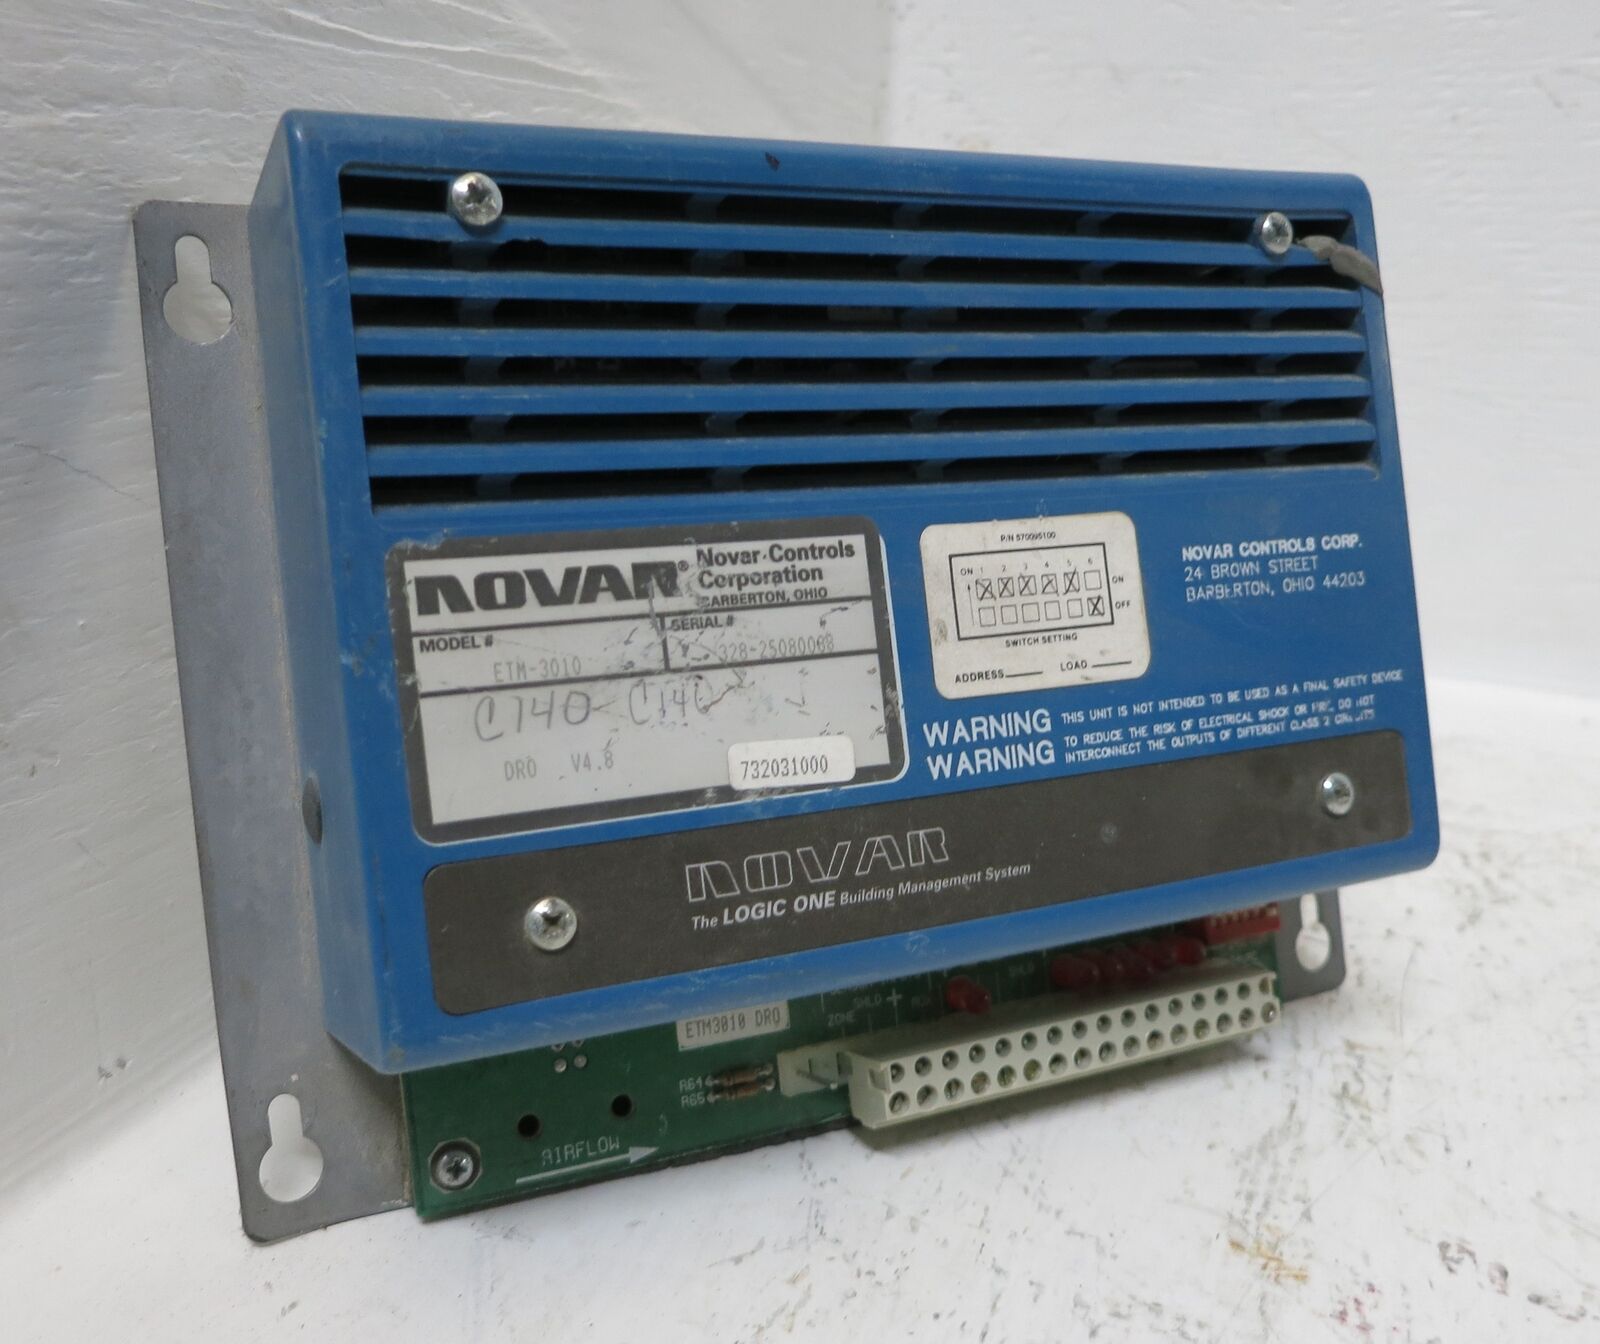 Novar ETM-3010 V4.8 Logic One Direct Digital Controller DRO DDC HVAC Control